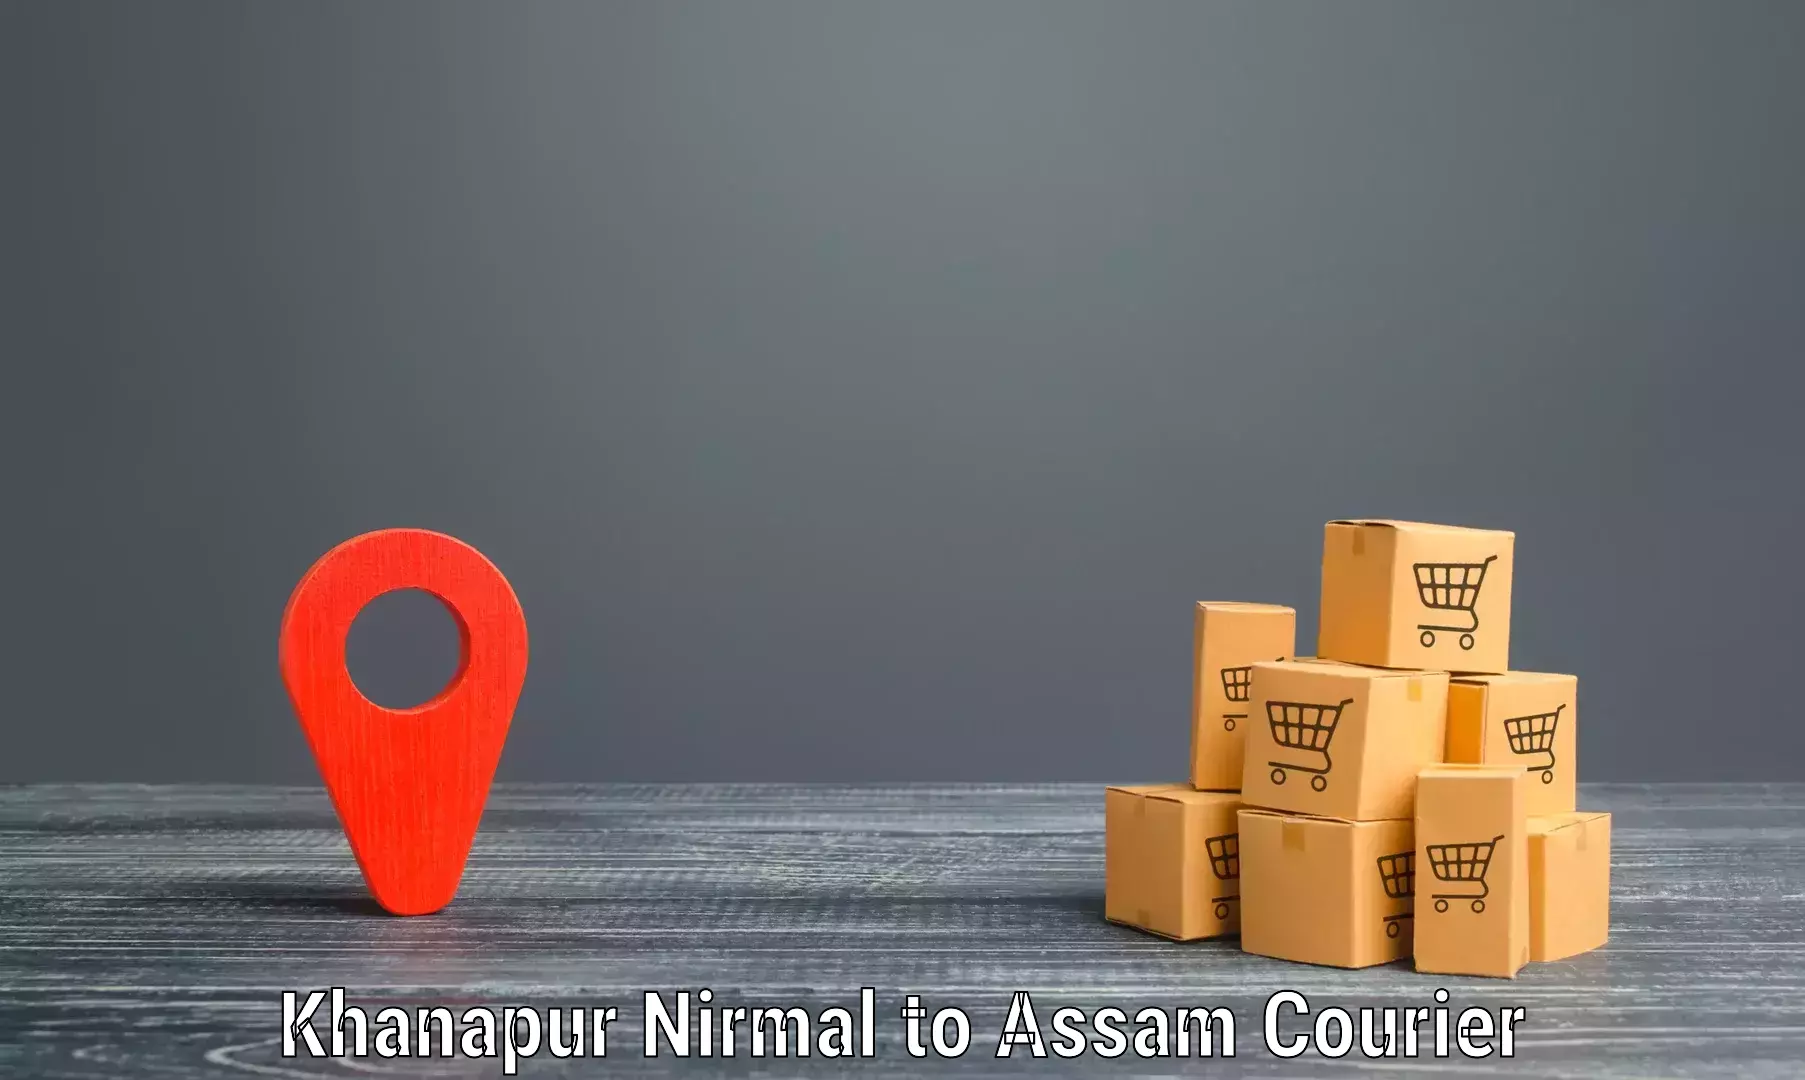 Business delivery service Khanapur Nirmal to Guwahati